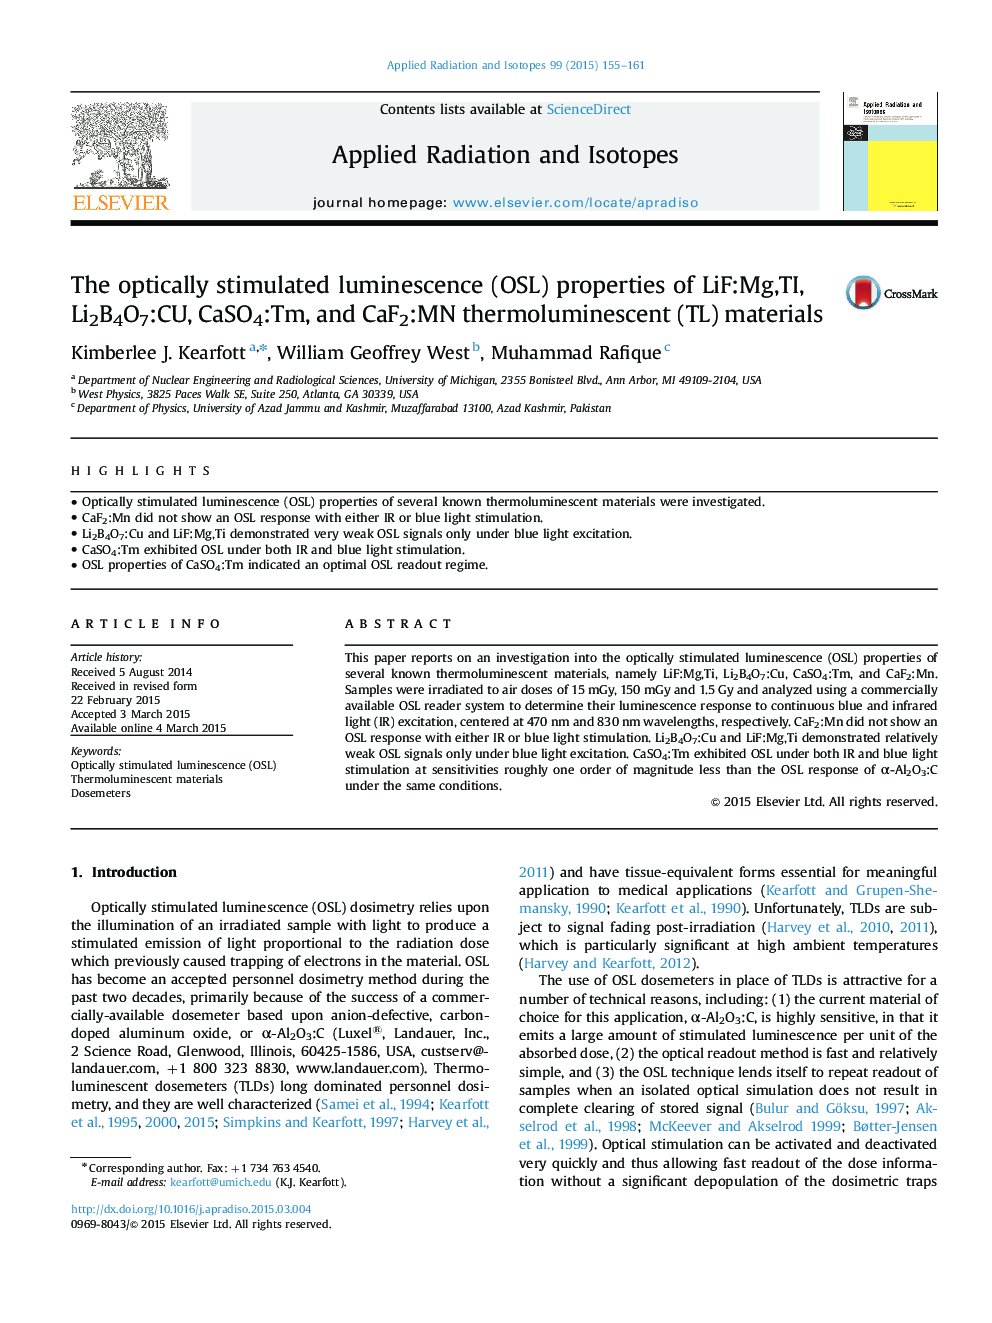 The optically stimulated luminescence (OSL) properties of LiF:Mg,TI, Li2B4O7:CU, CaSO4:Tm, and CaF2:MN thermoluminescent (TL) materials